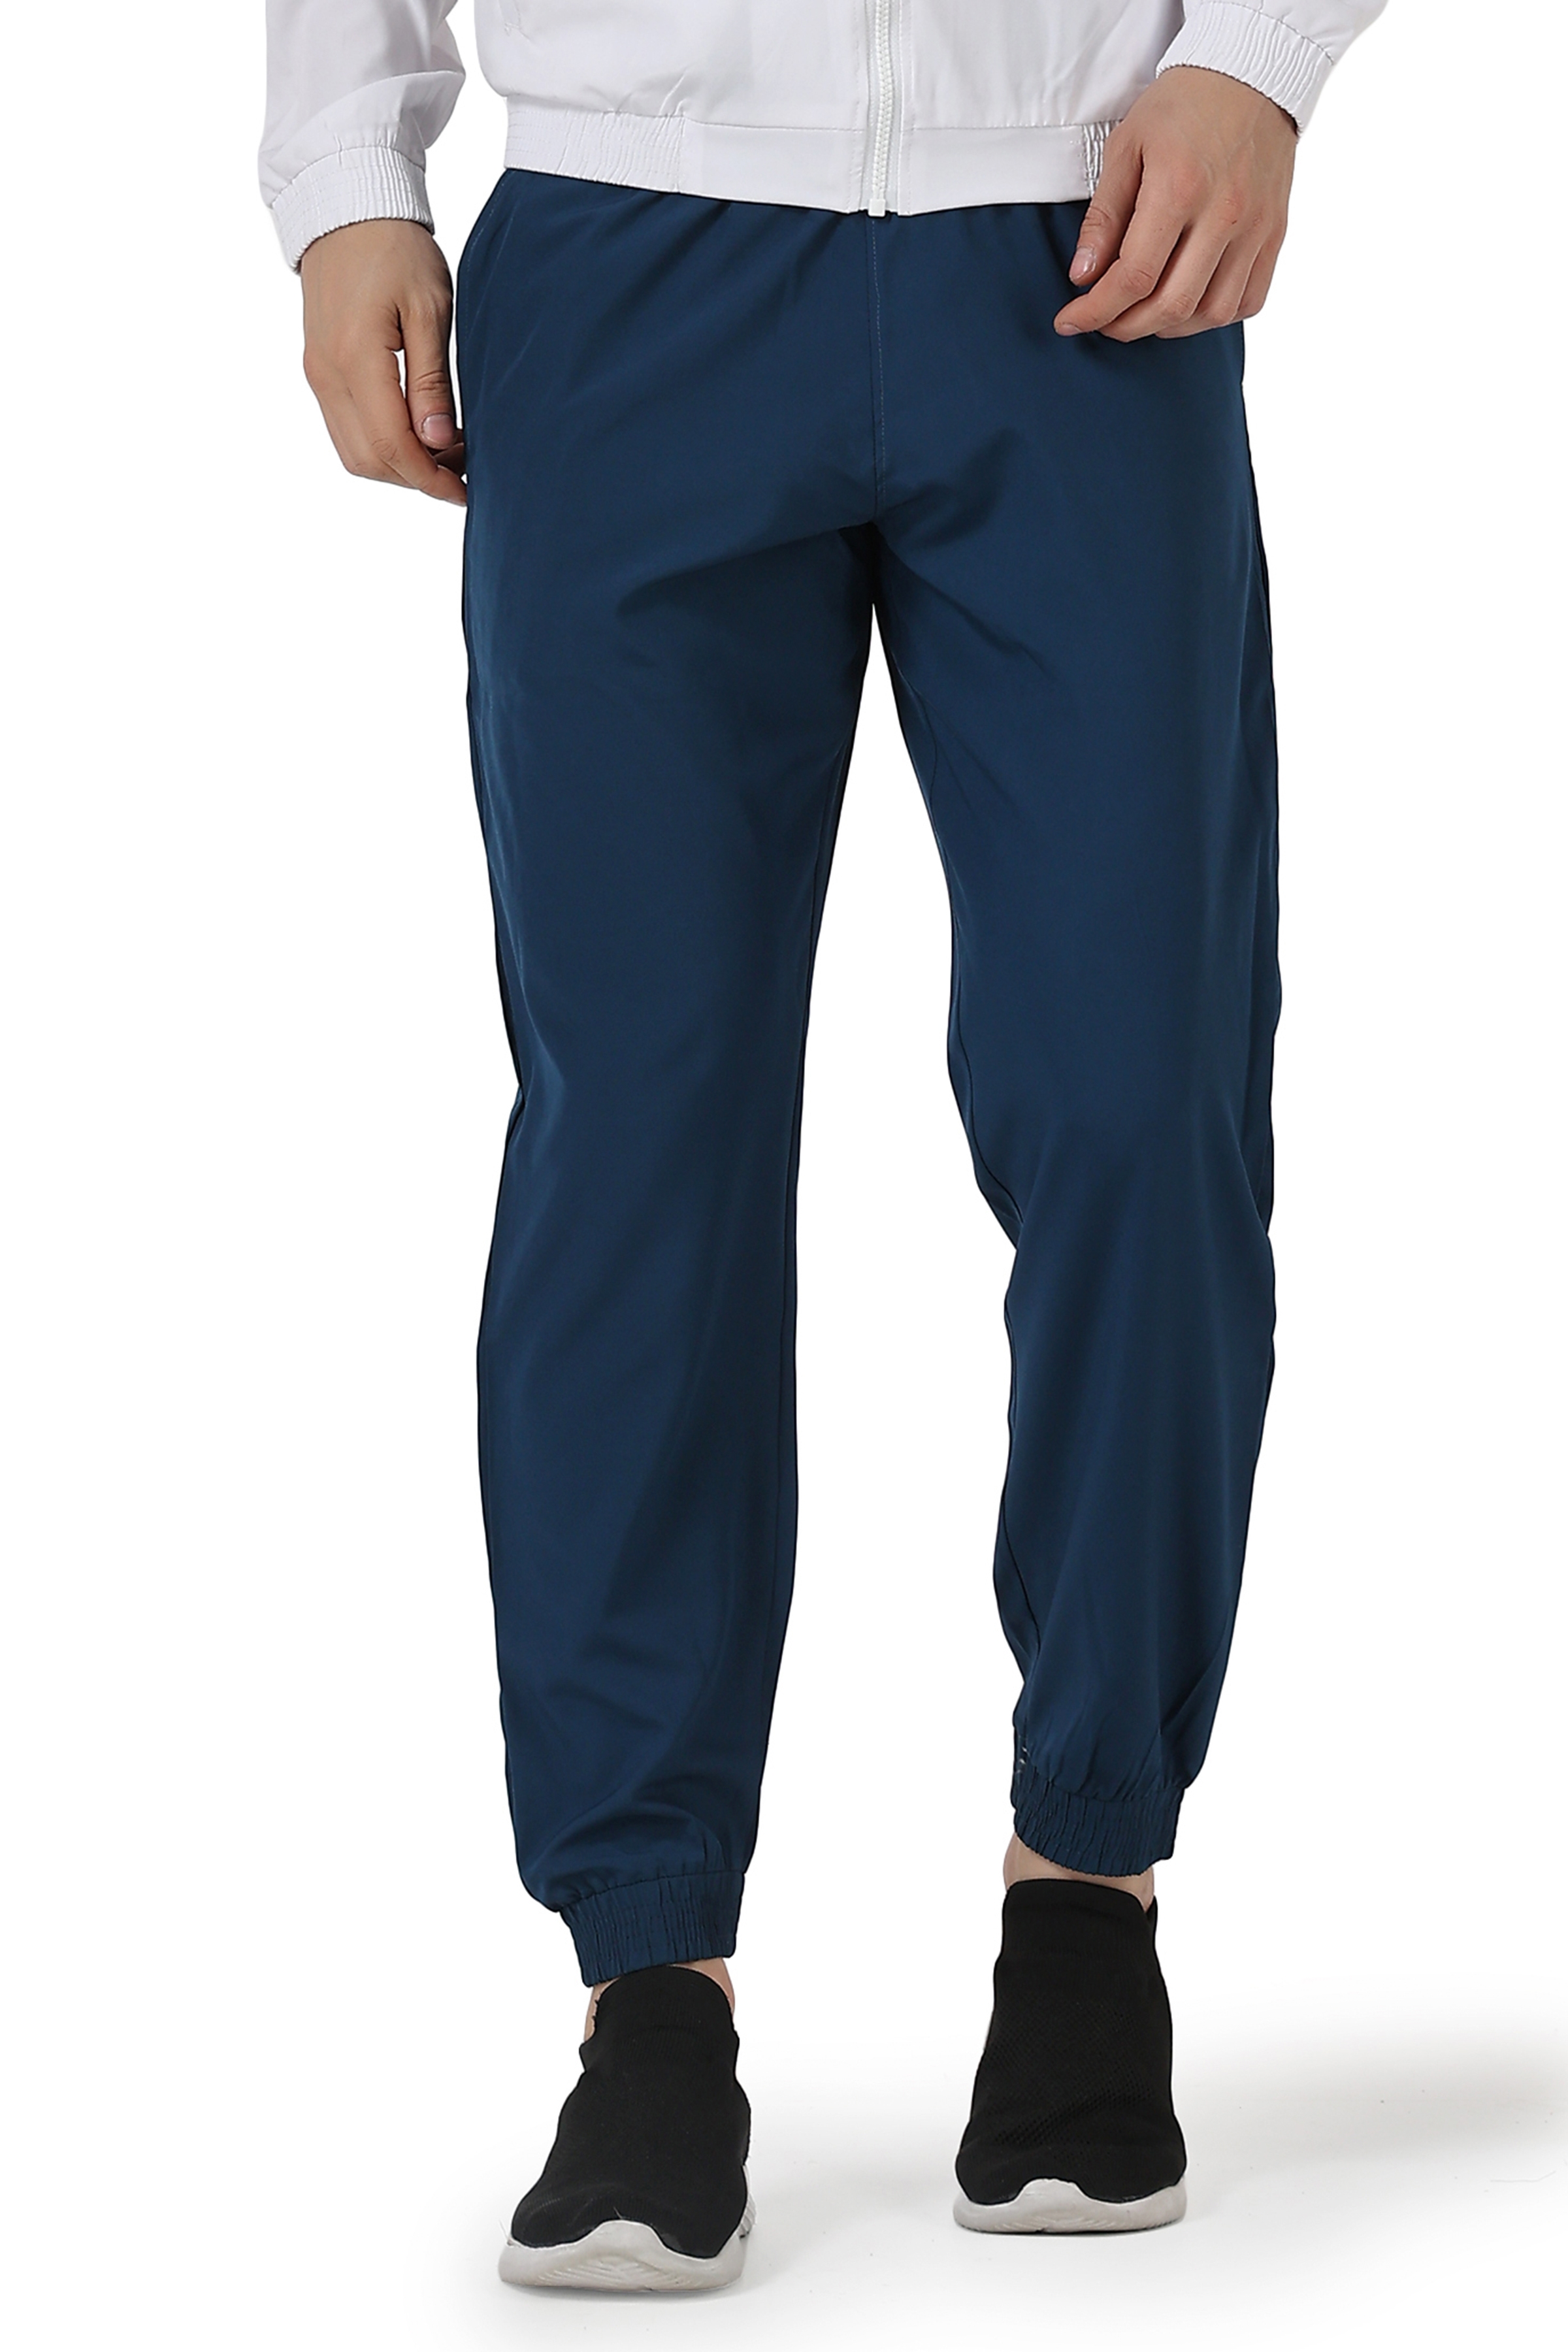 LACE IT | LACE IT Solid Men Sportswear/Activewear Track Pants-Airforce